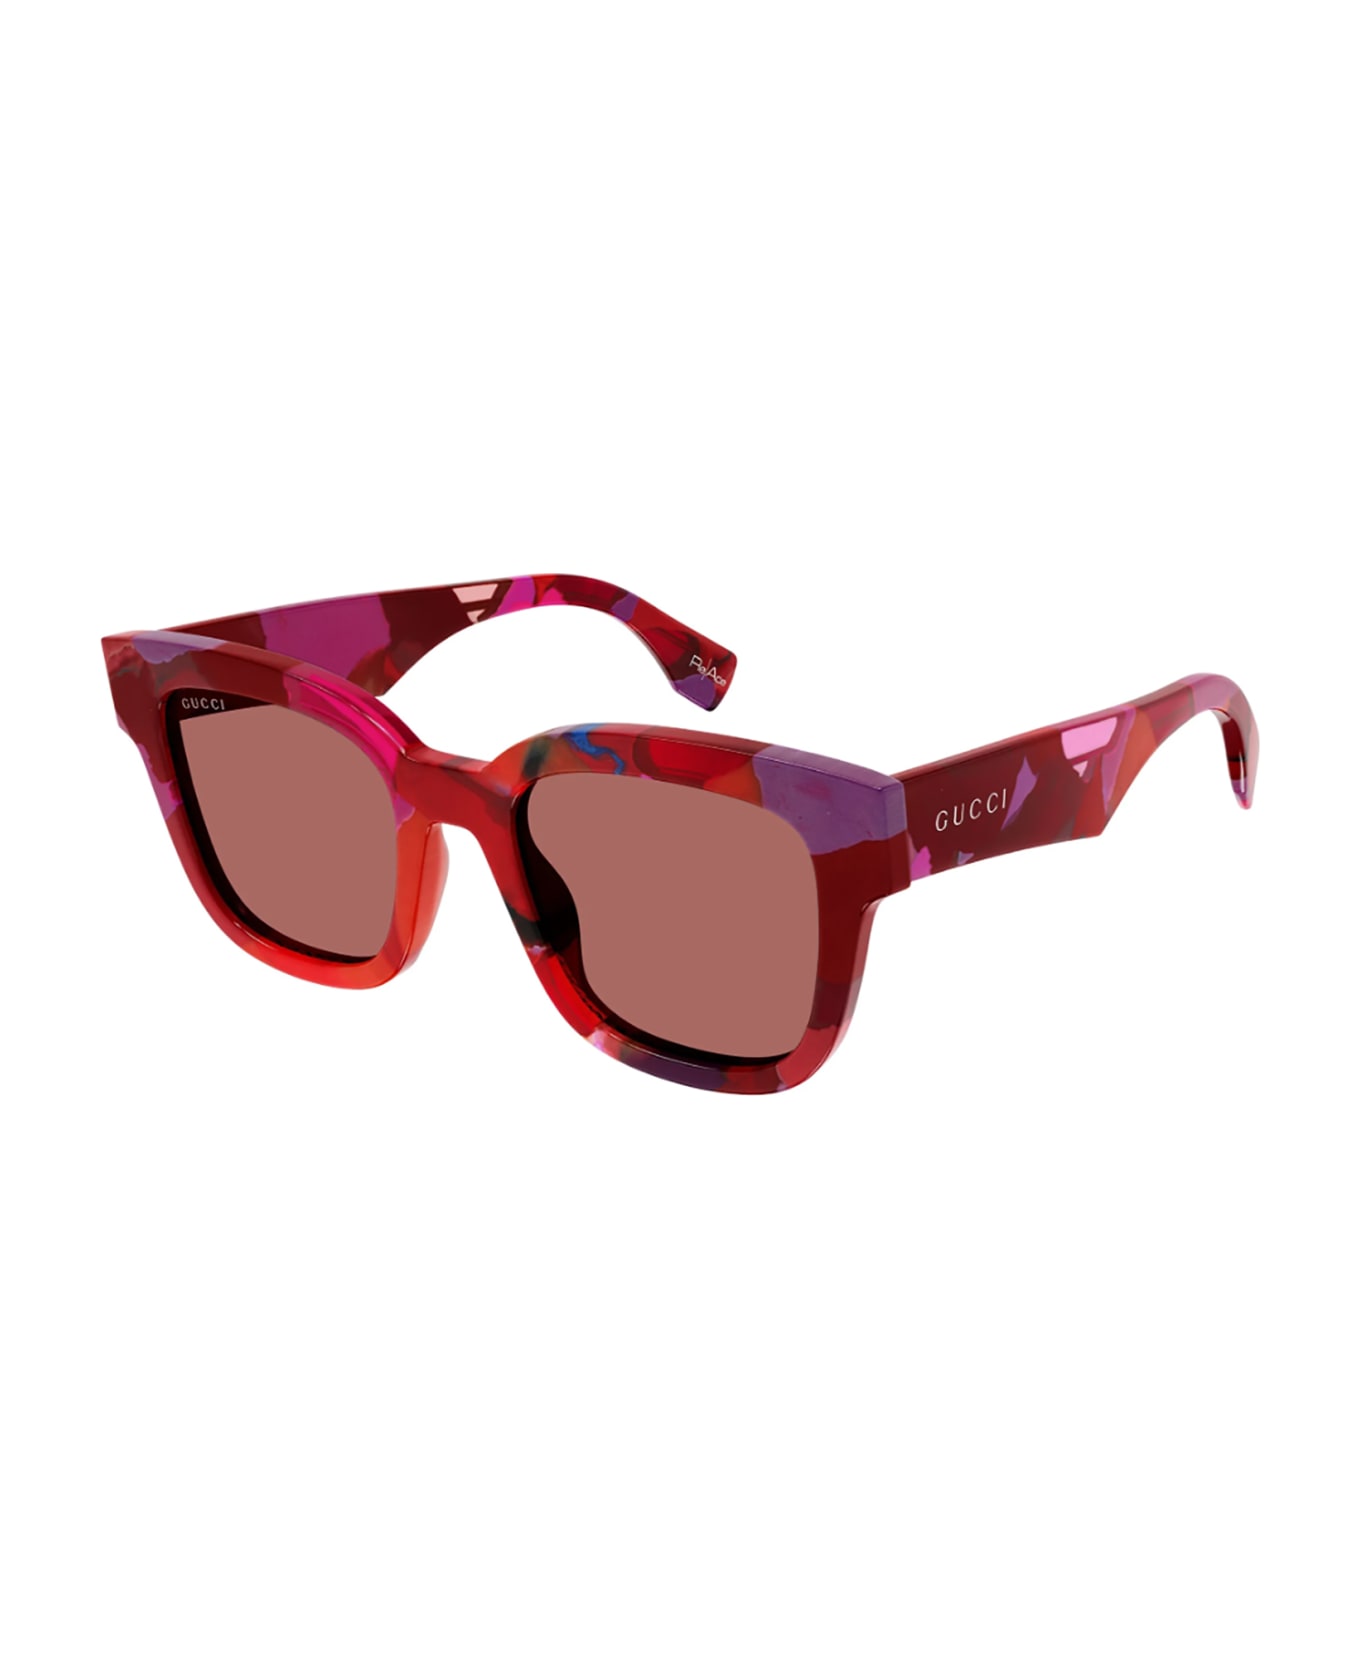 Gucci Eyewear GG1624S Sunglasses - Red Red Orange